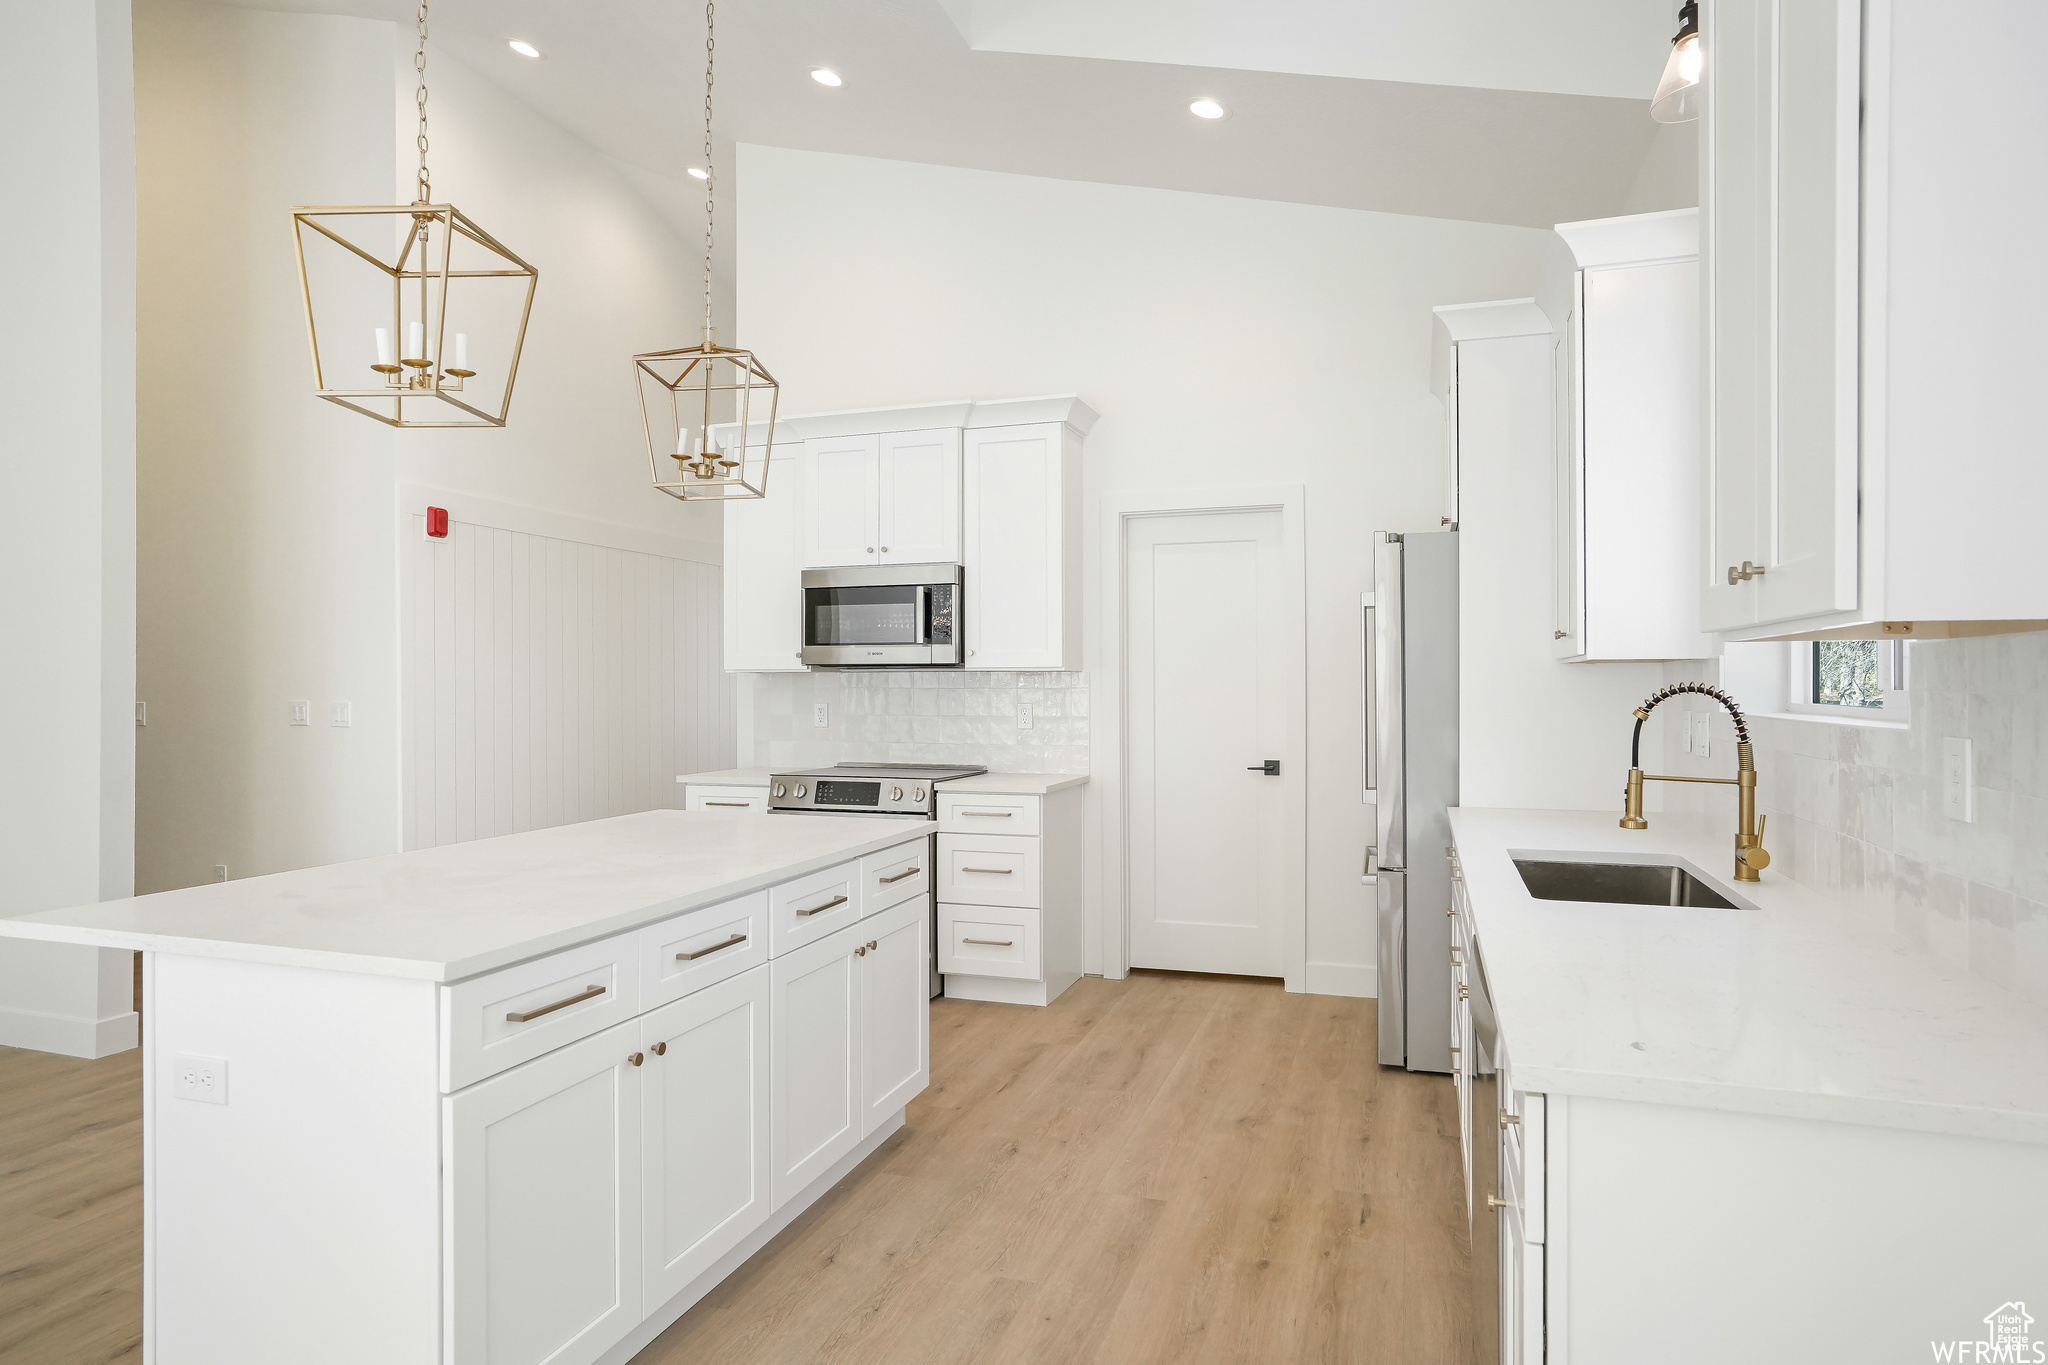 Kitchen with white cabinets, stainless steel appliances, backsplash, and light hardwood / wood-style floors